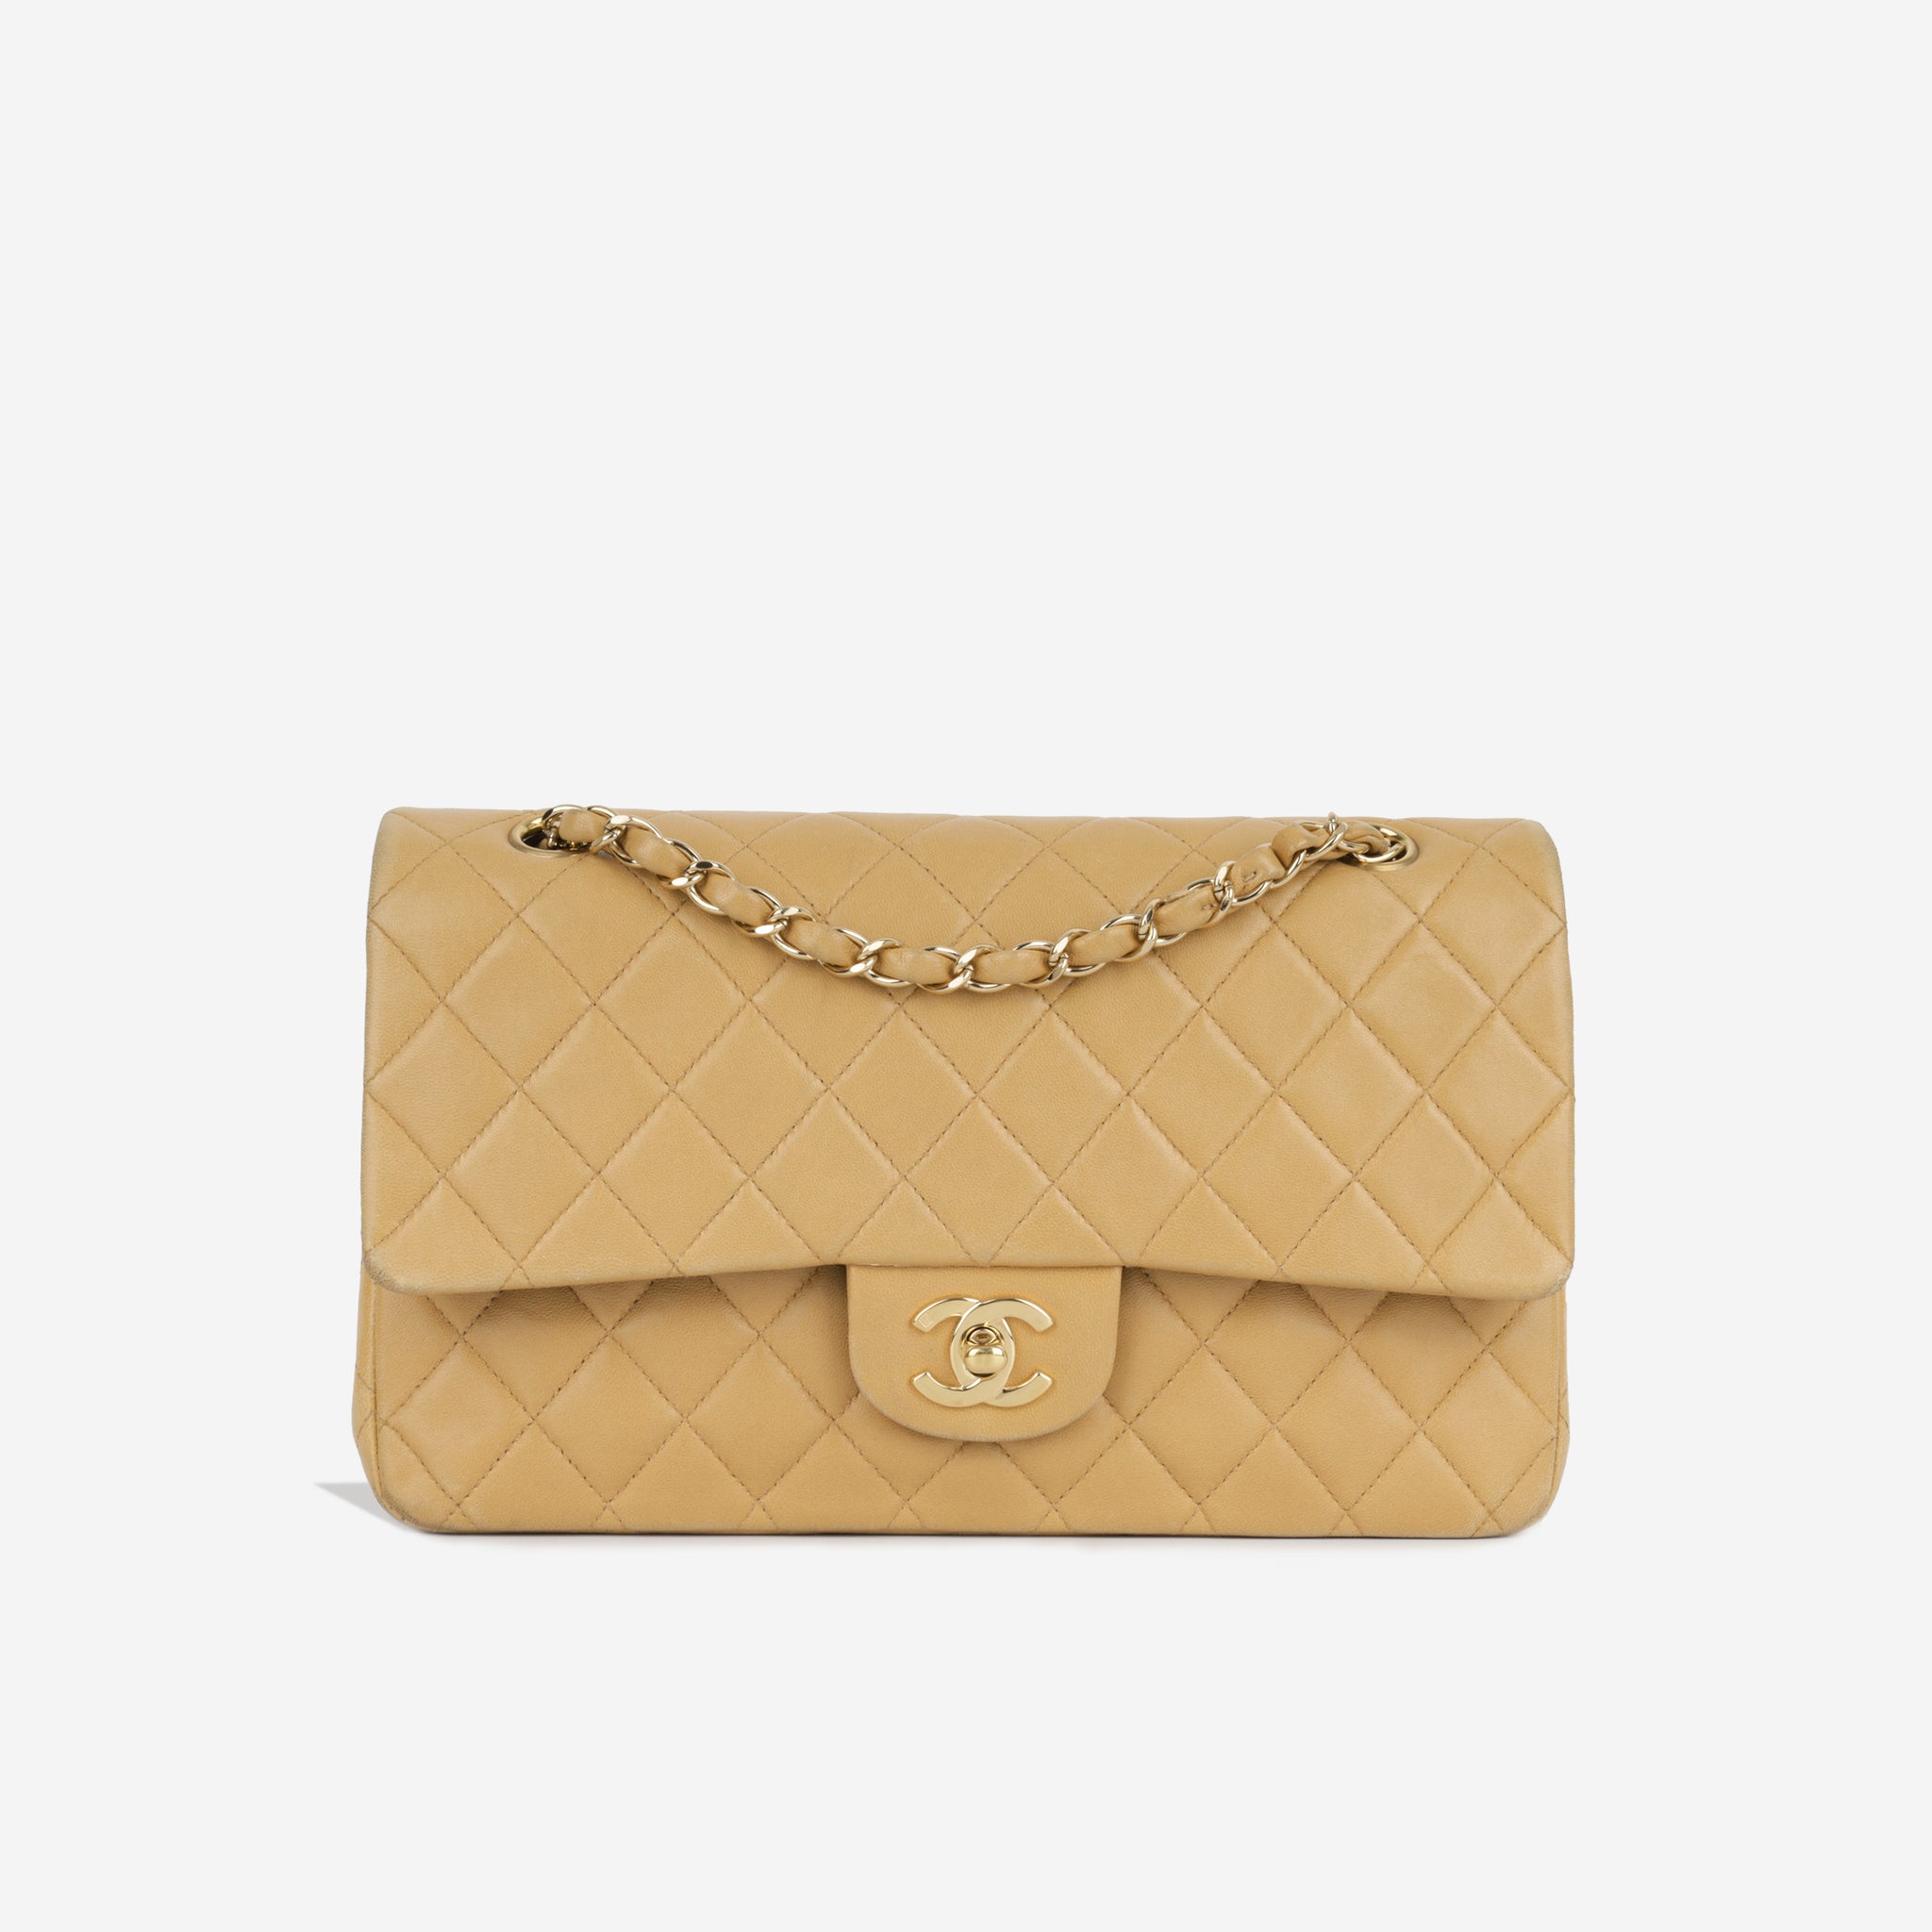 Chanel - Vintage Medium Classic Flap Bag - Beige Lambskin - GHW - 2002